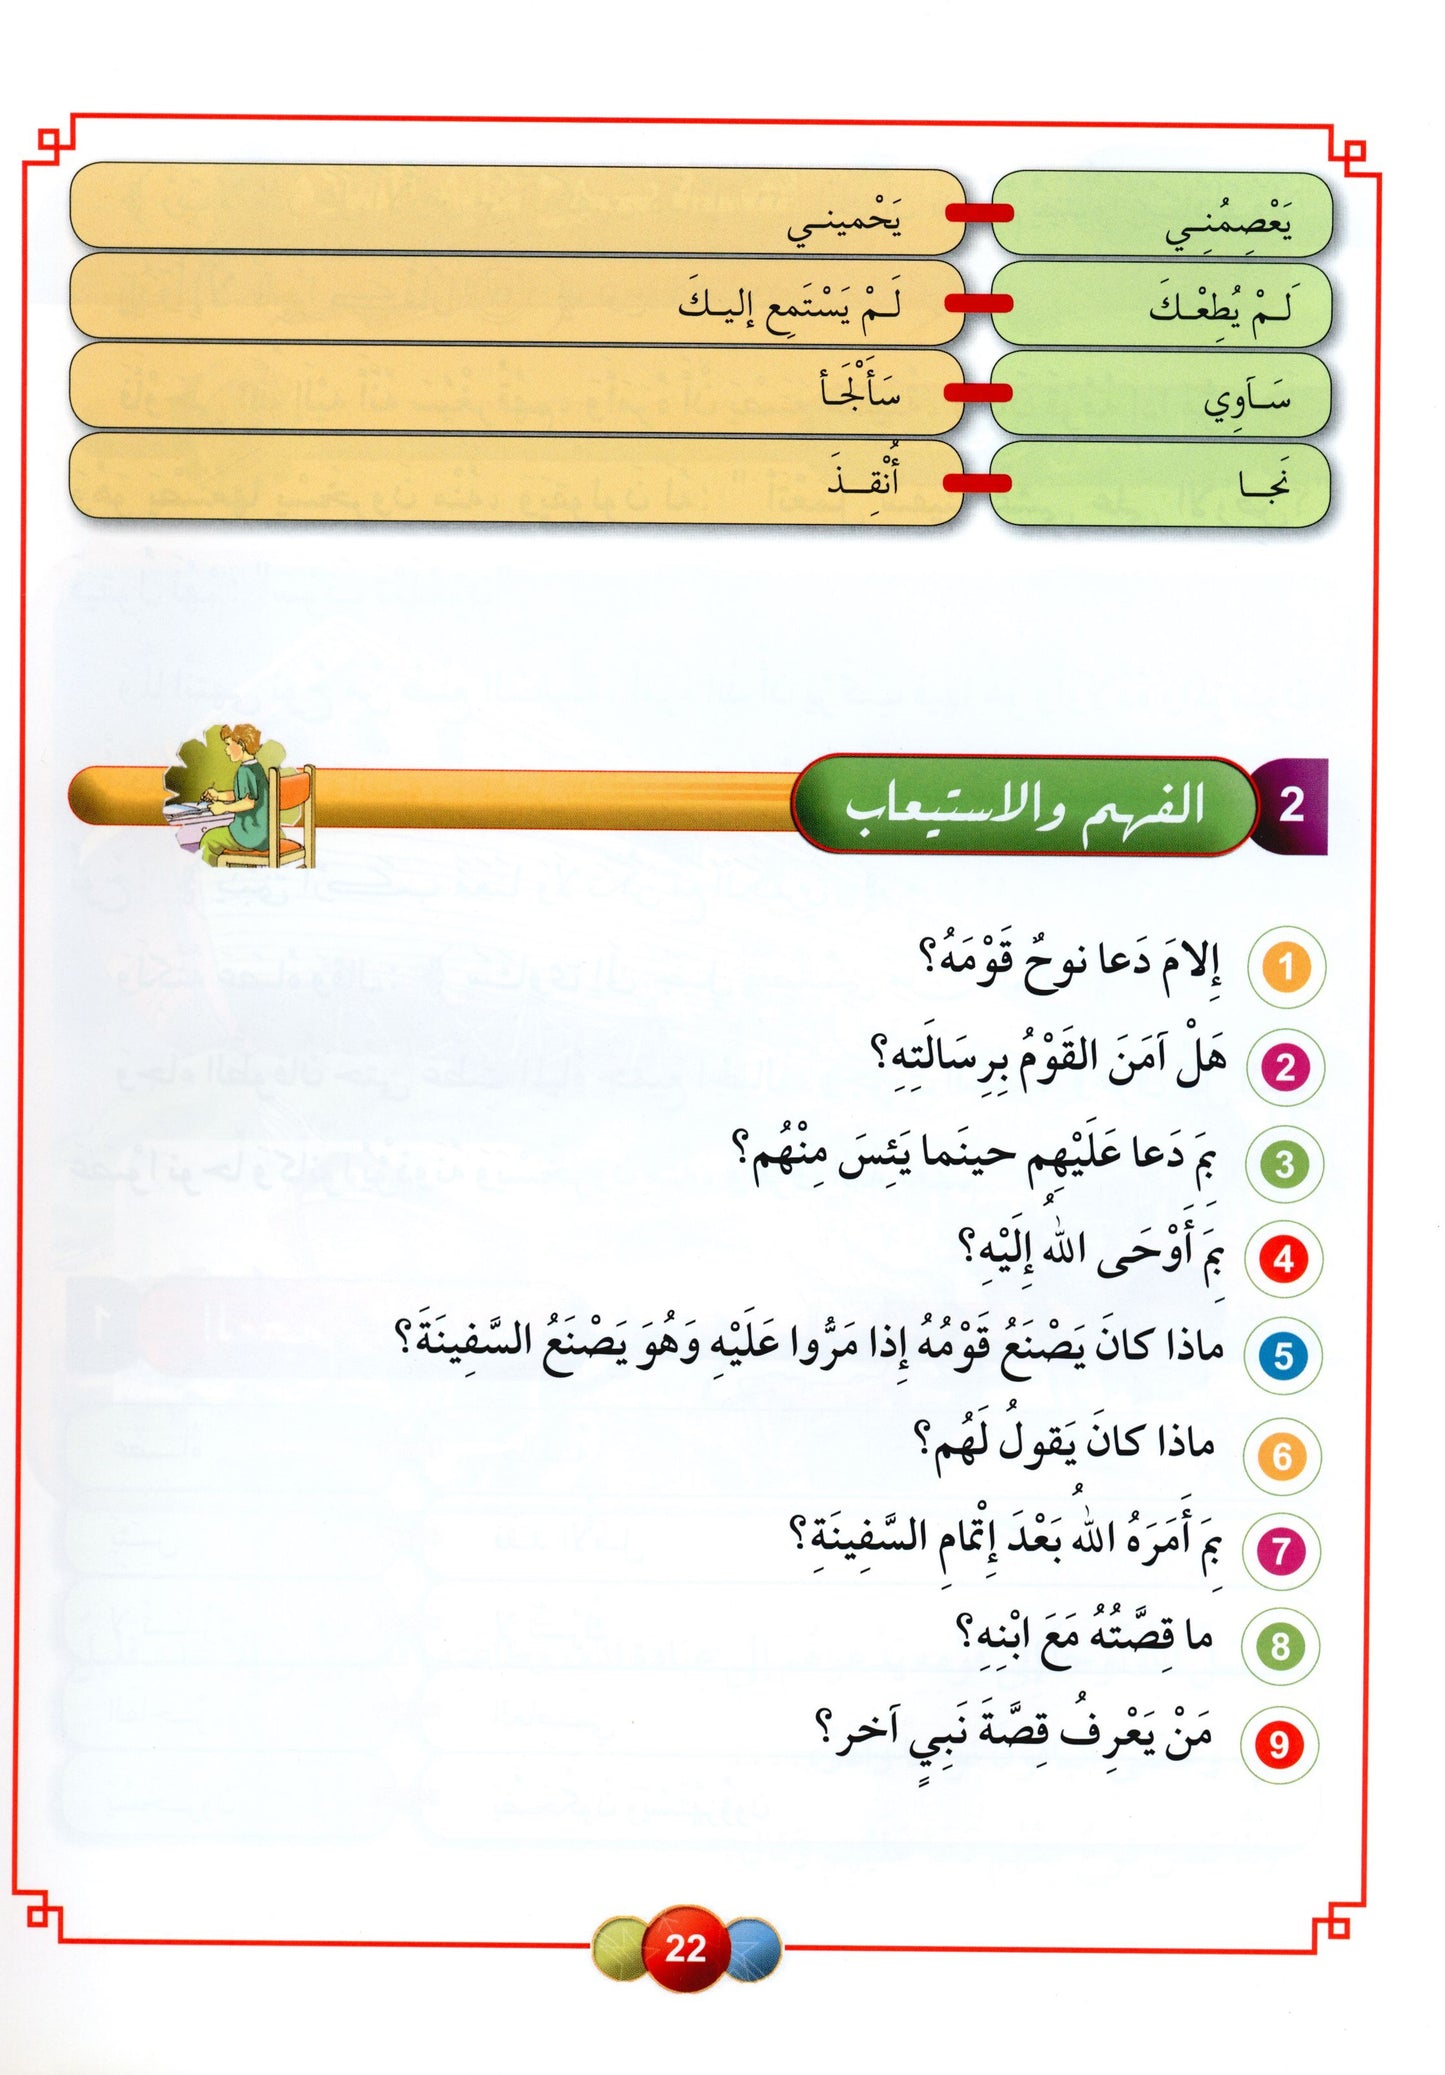 Al Aafaq Textbook - Grade/Level 5